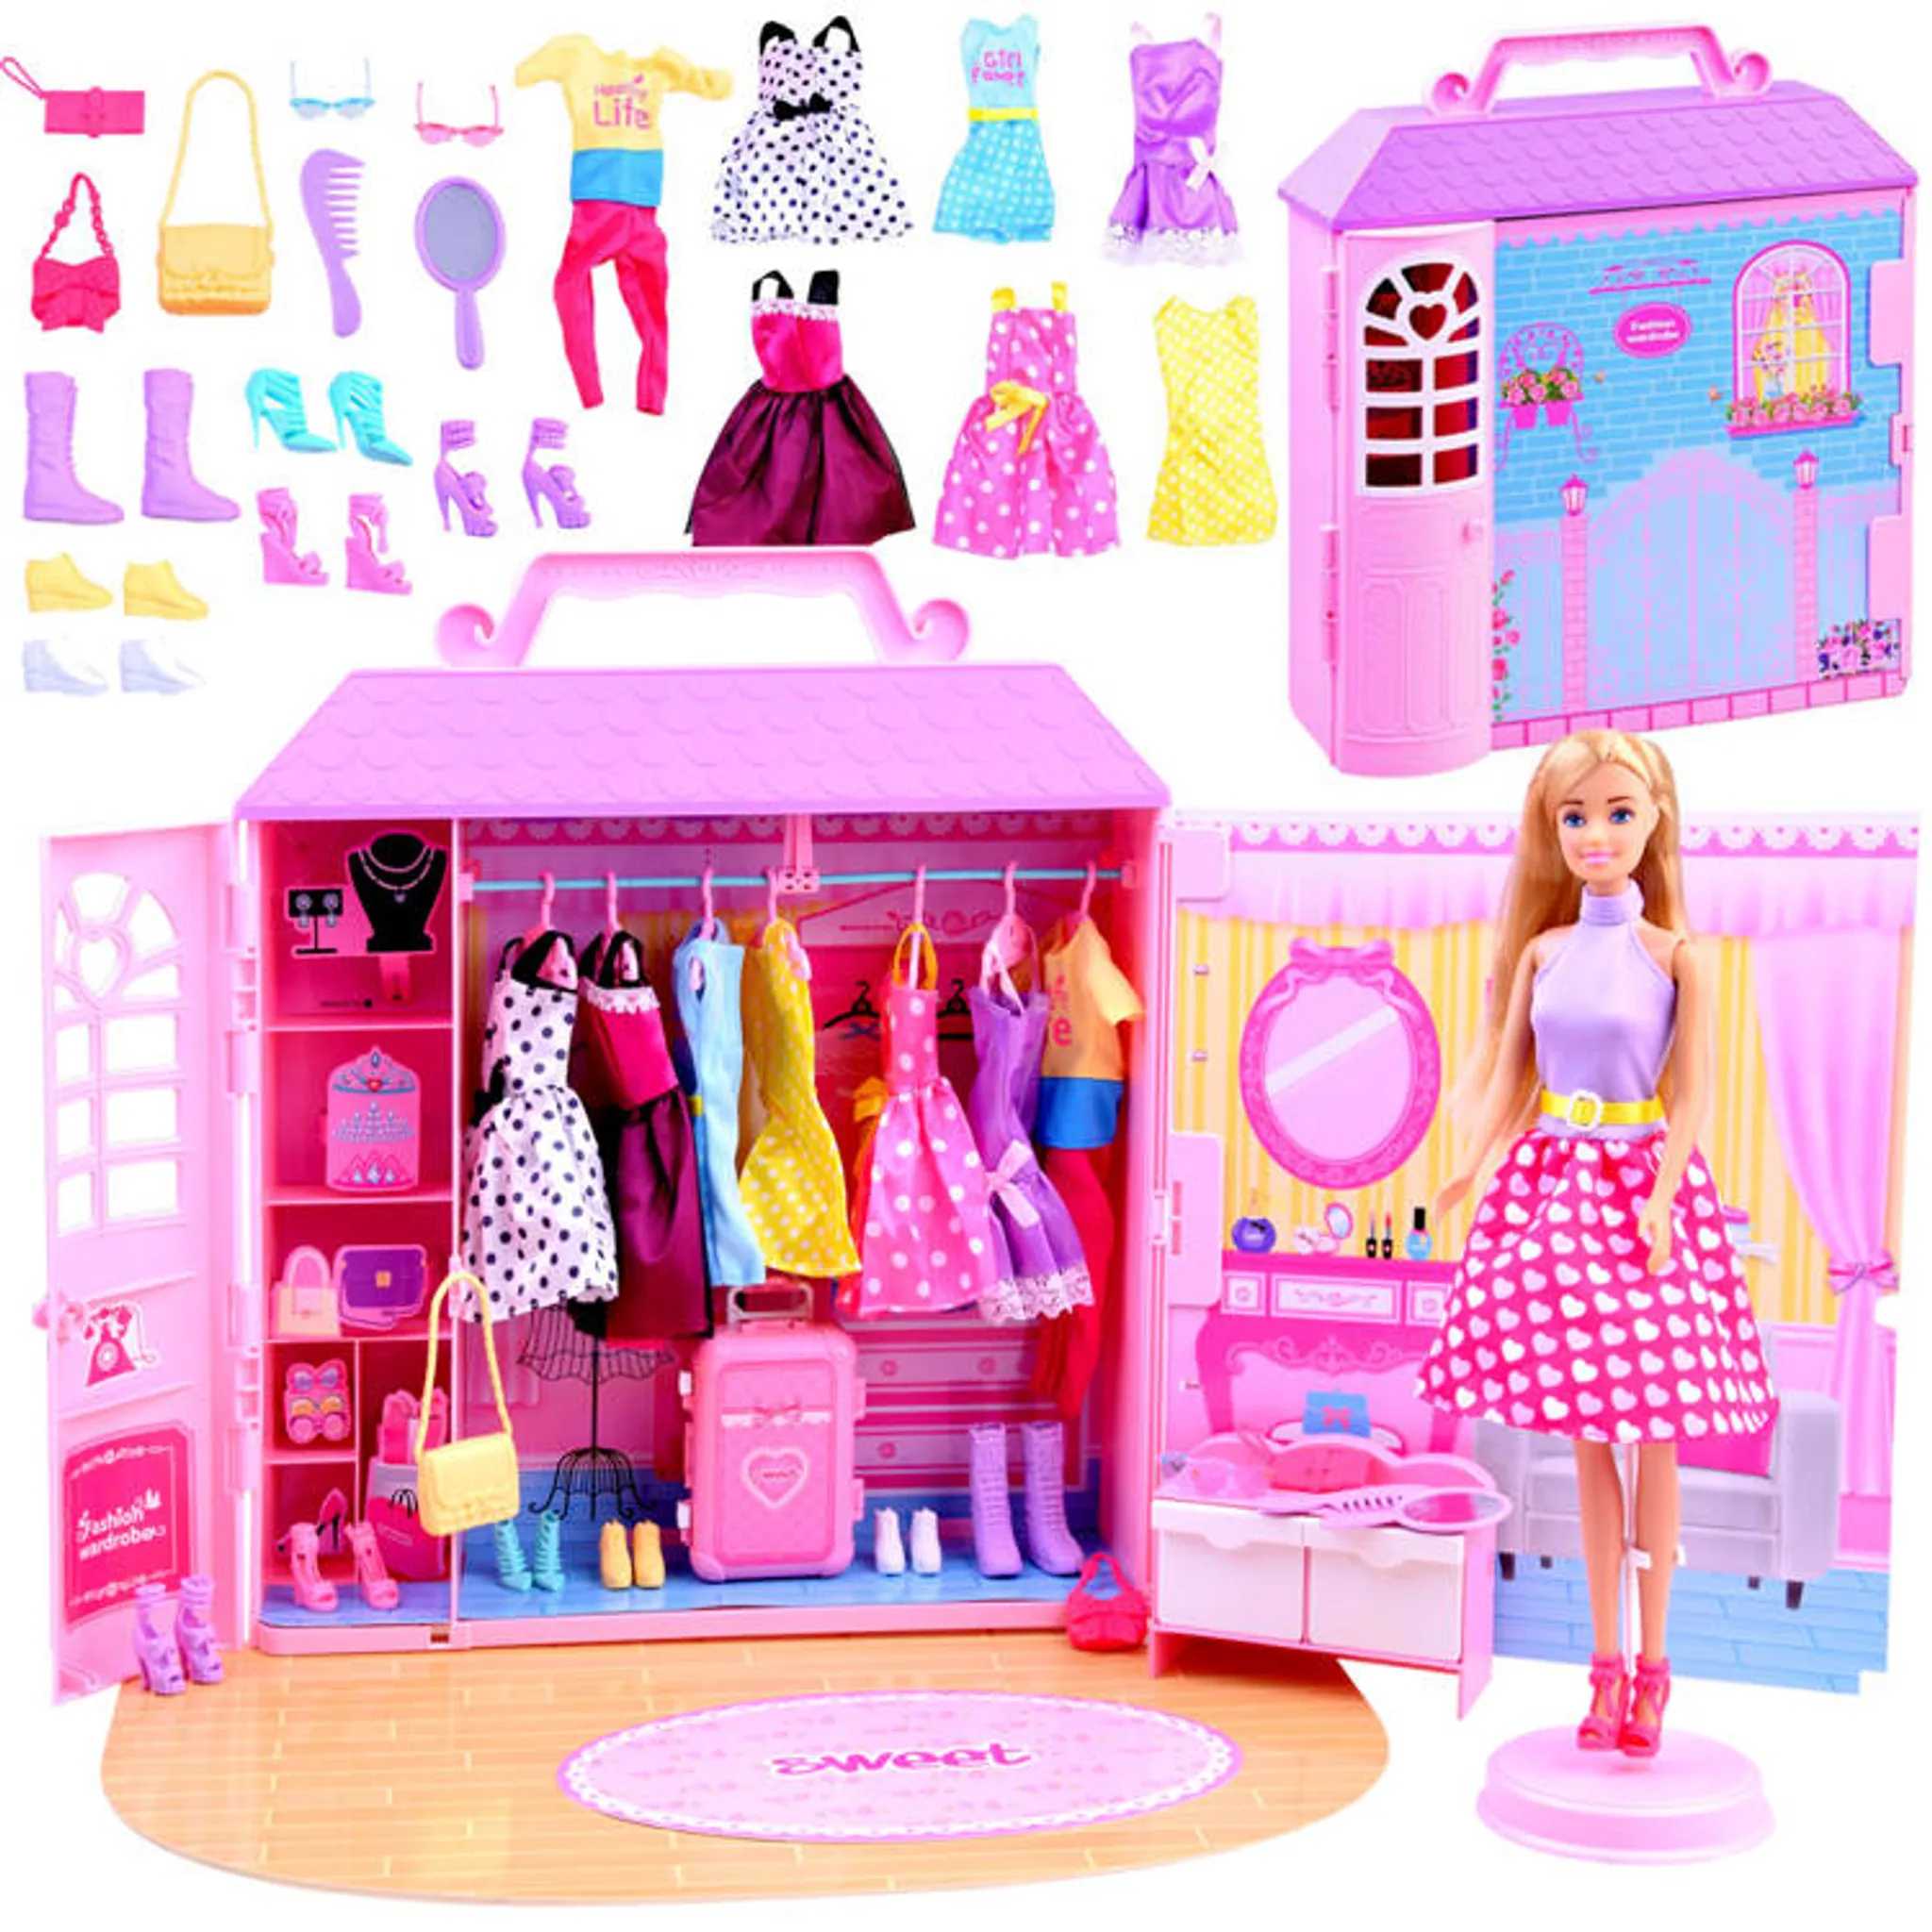 Гардероб барби. Кукла Барби с гардеробом. Шкаф для Барби с одеждой и аксессуарами. Шкаф для одежды Барби. Гардеробная для кукол.